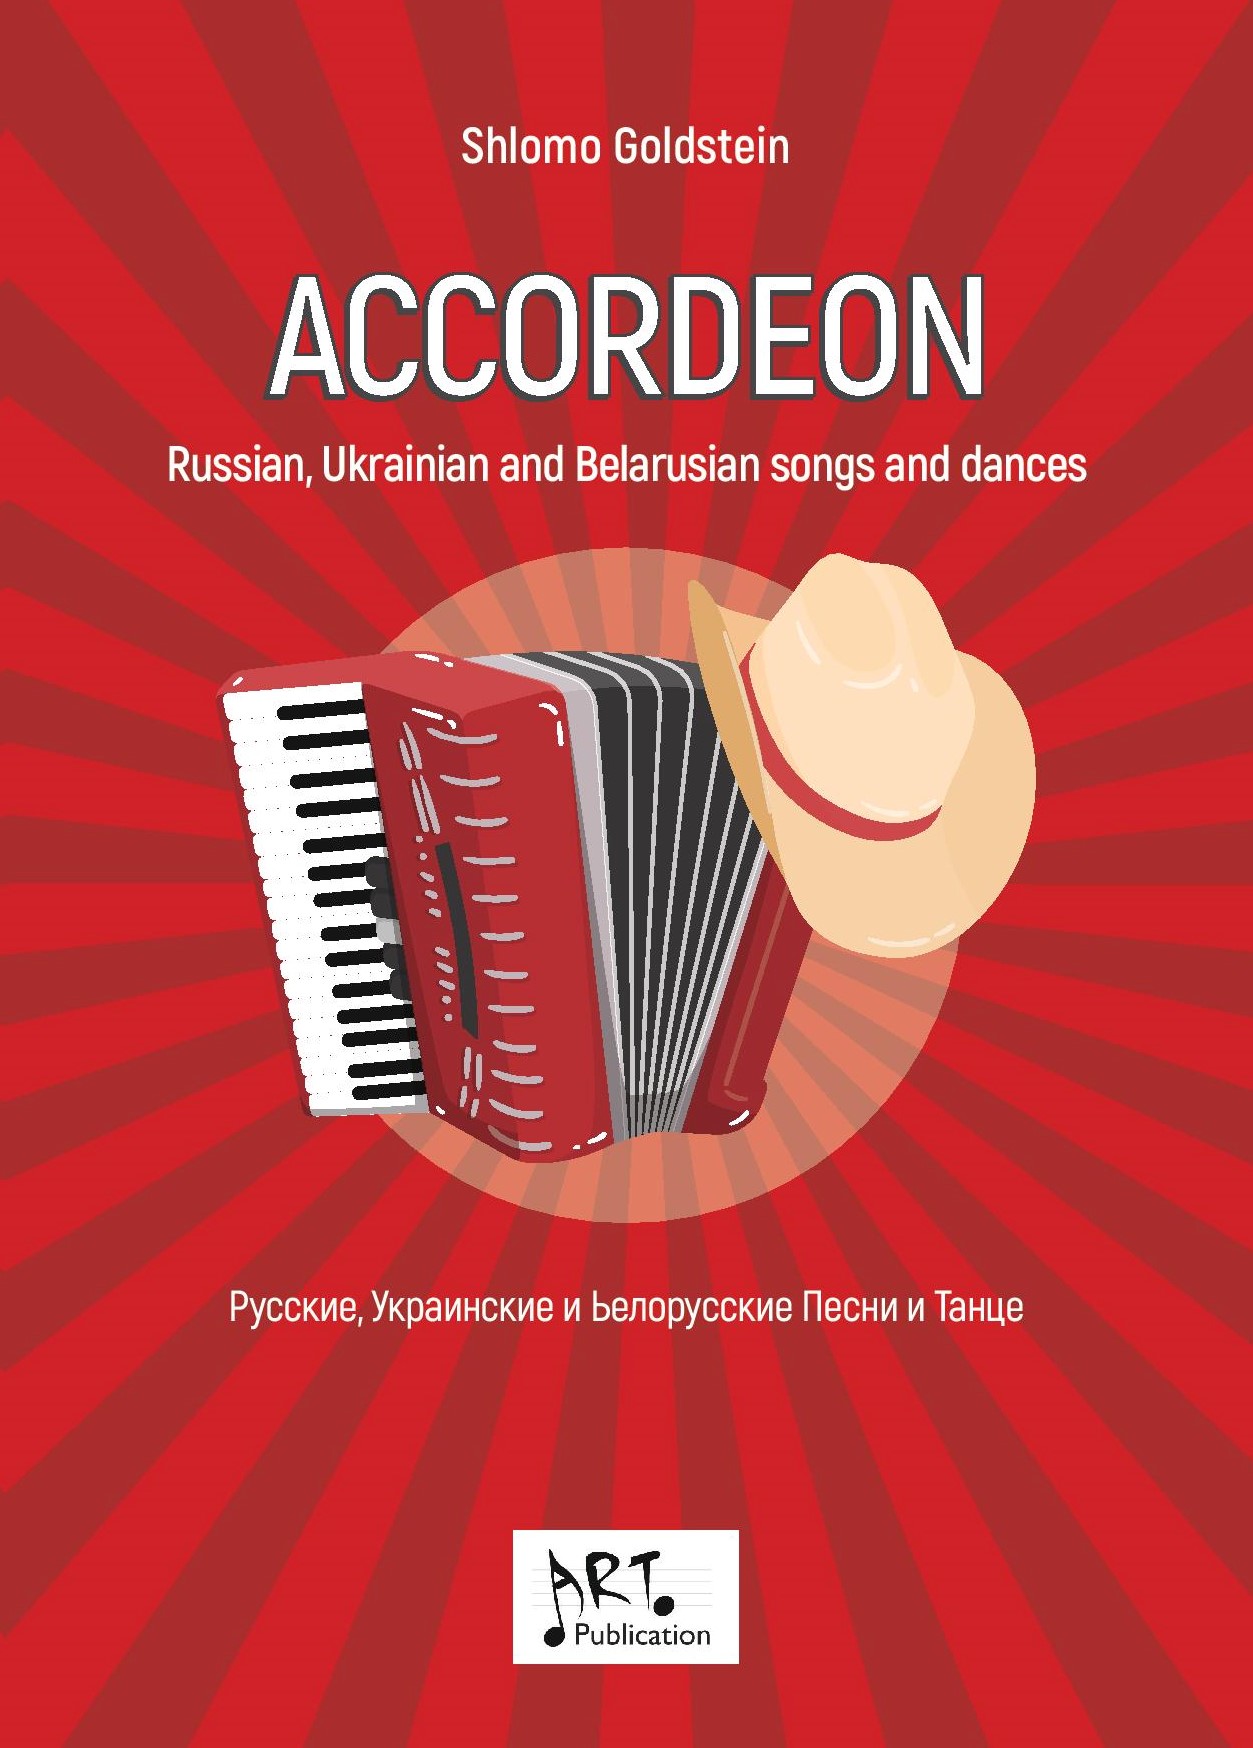 Accordeon - Russian songs and dances